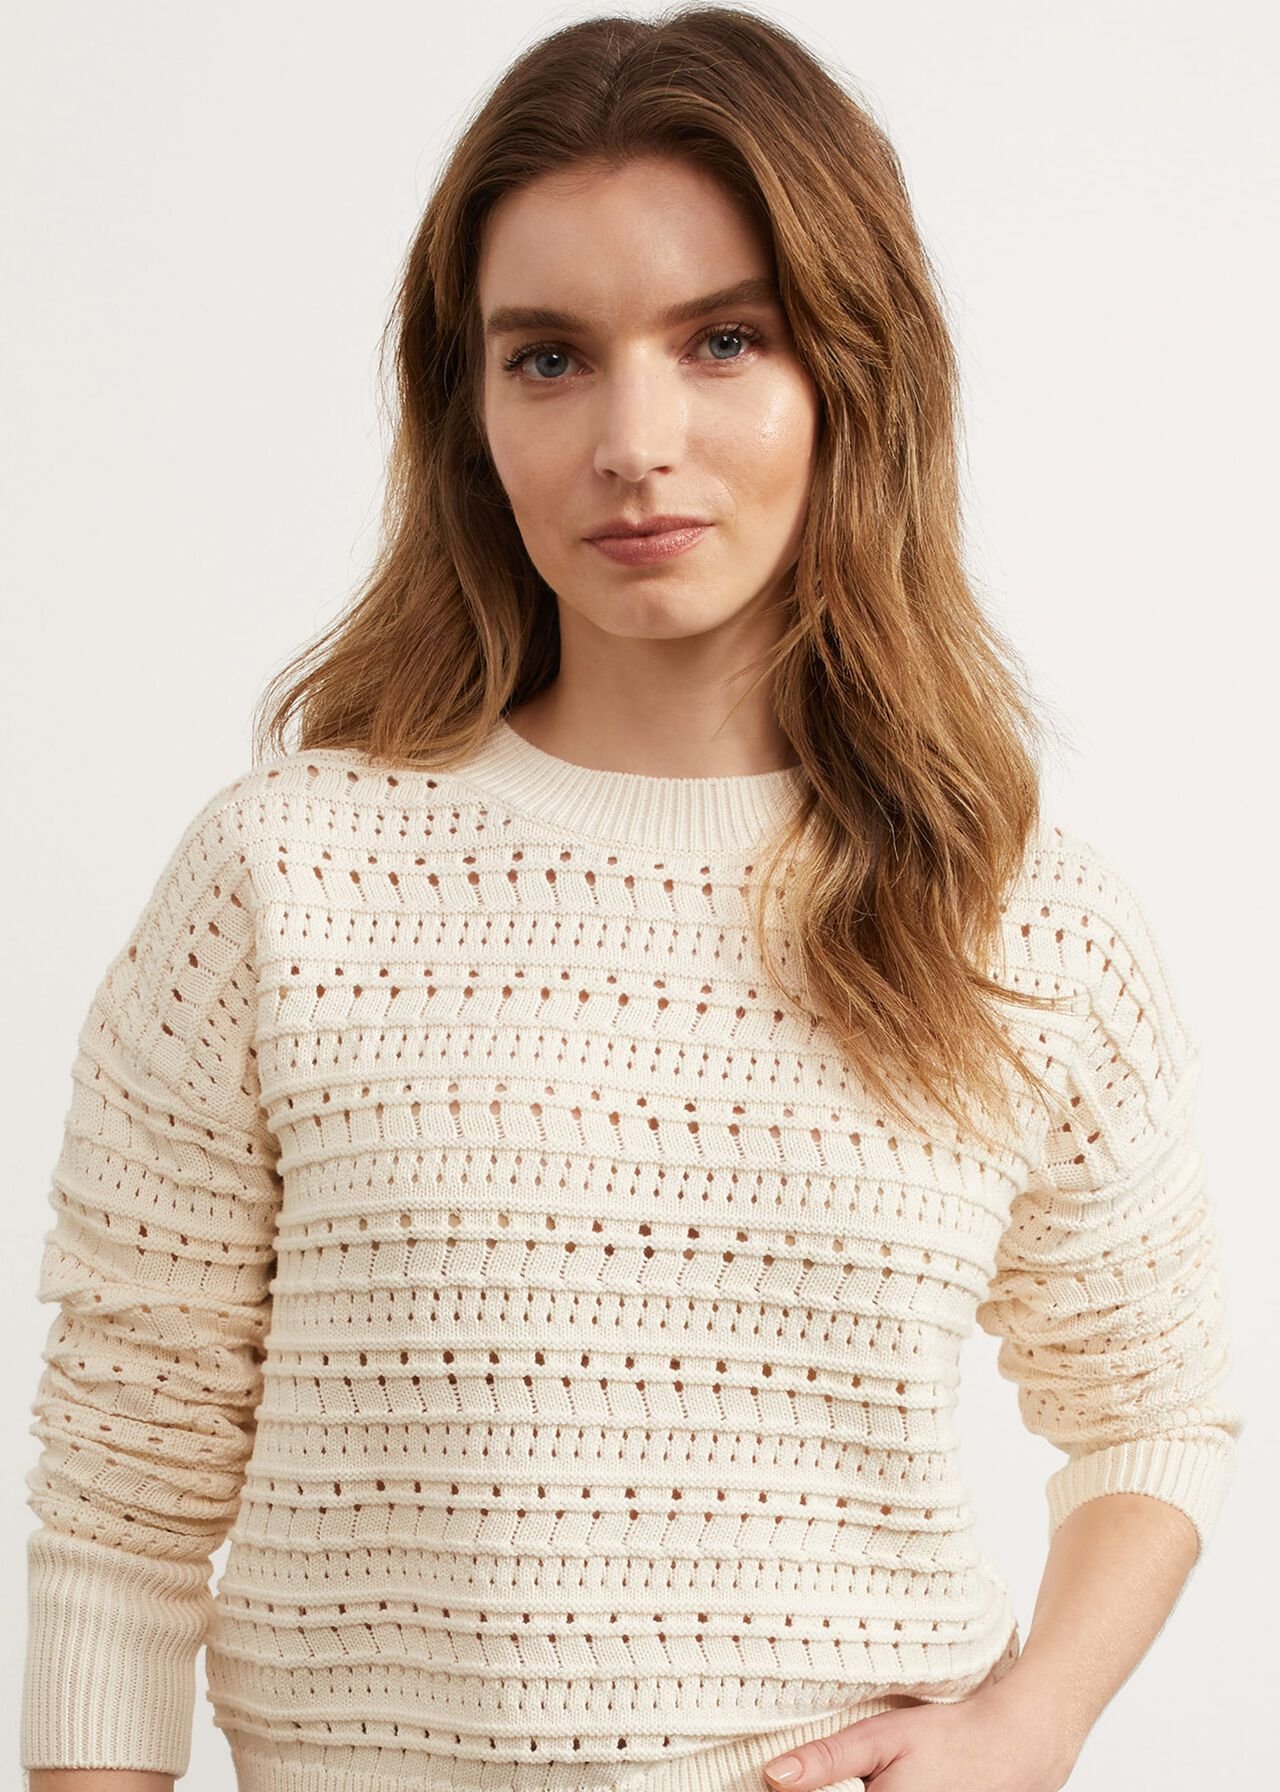 Colemere Cotton Sweater, Buttercream, hi-res